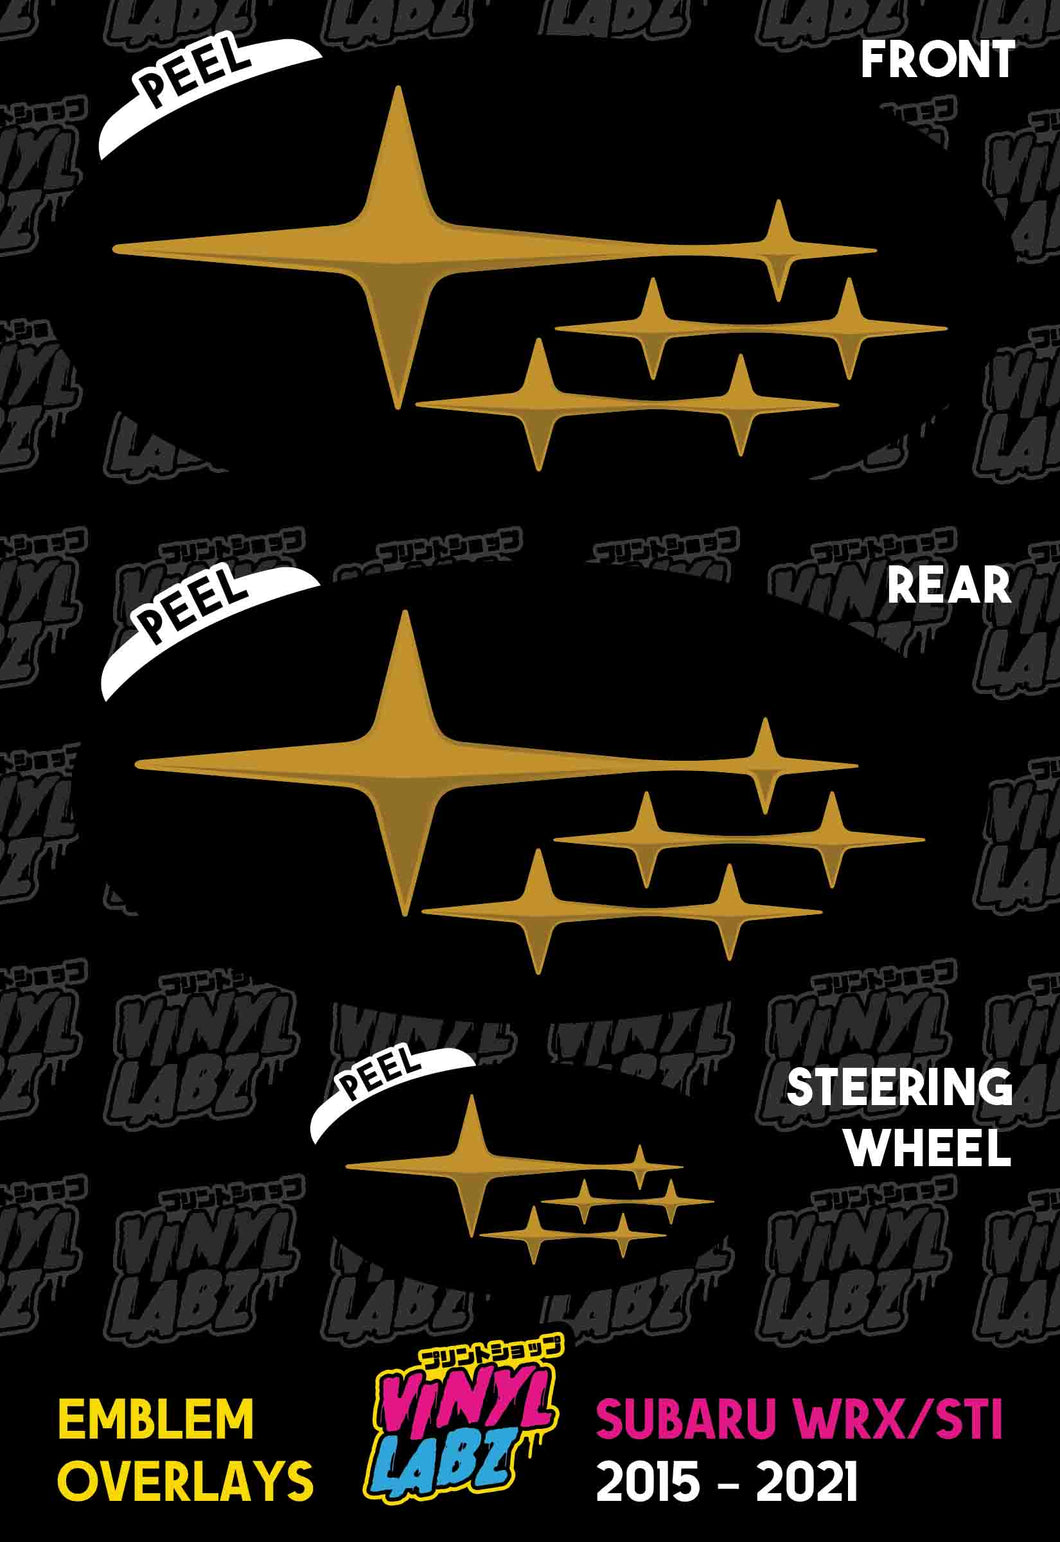 Subaru Vinyl Emblem Overlay (Black and Gold) | 2015-2021 Subaru WRX/STI